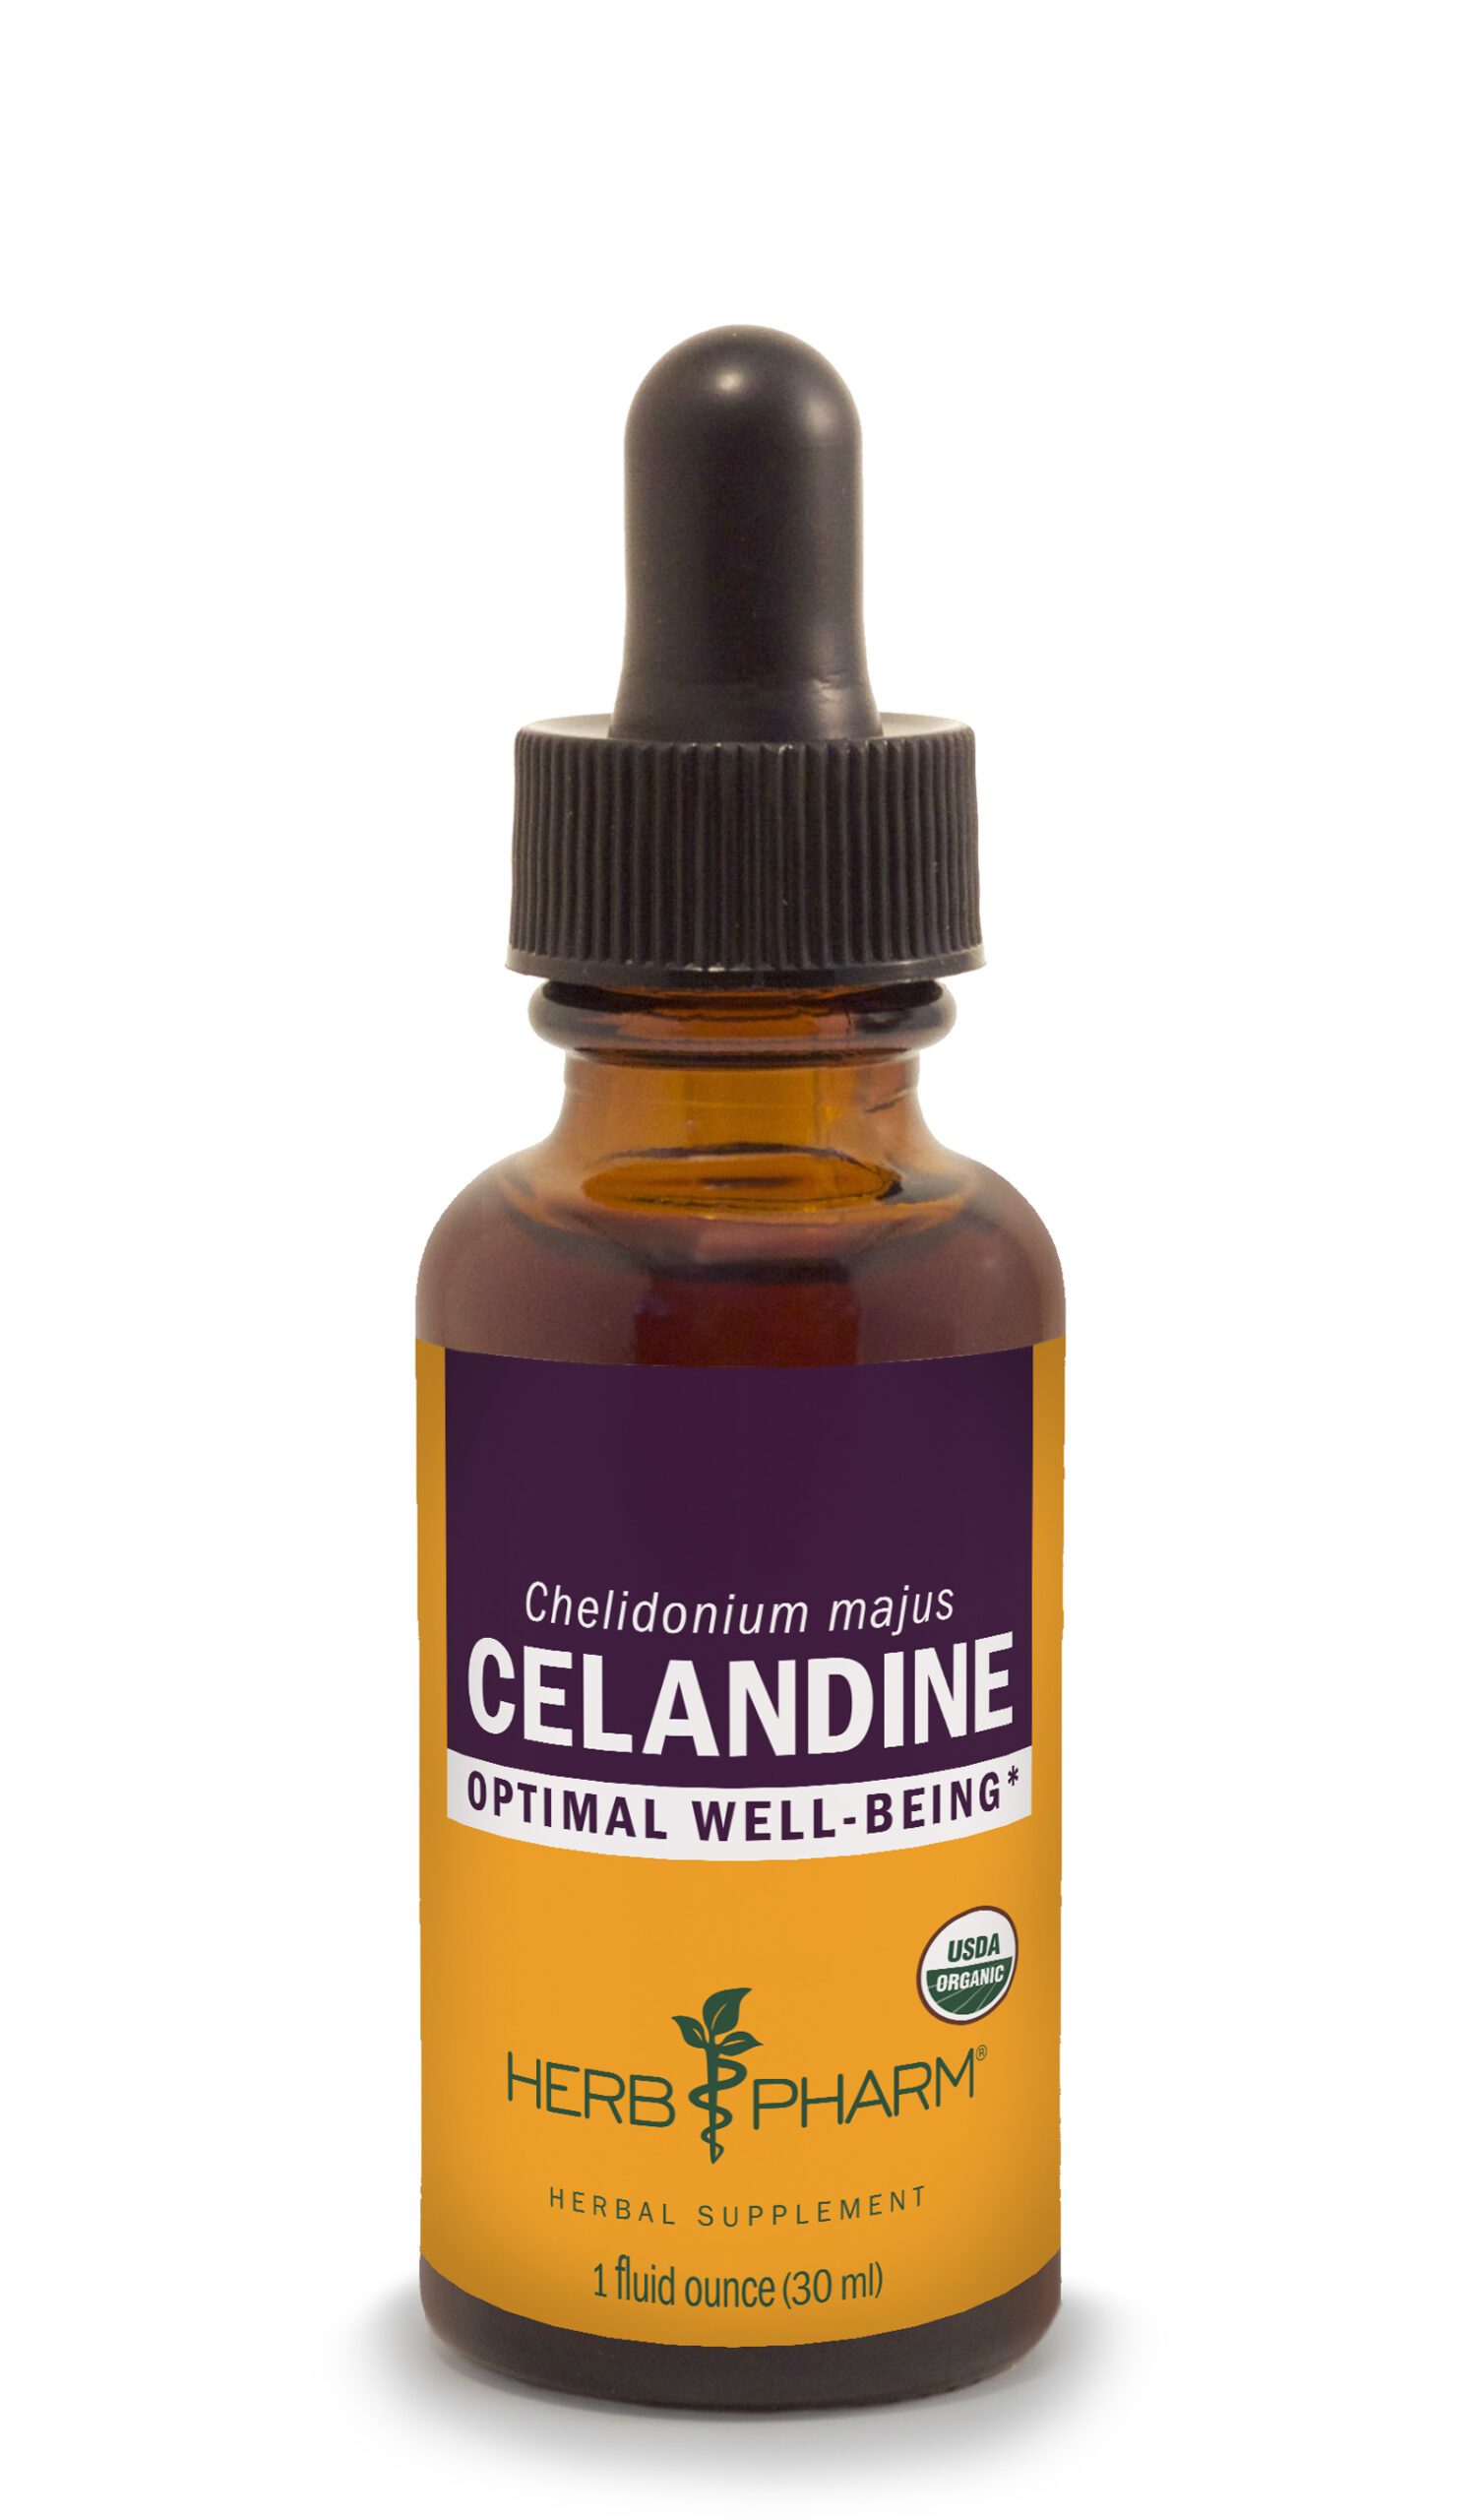 Product Listing Image for Herb Pharm Celandine Tincture 1oz